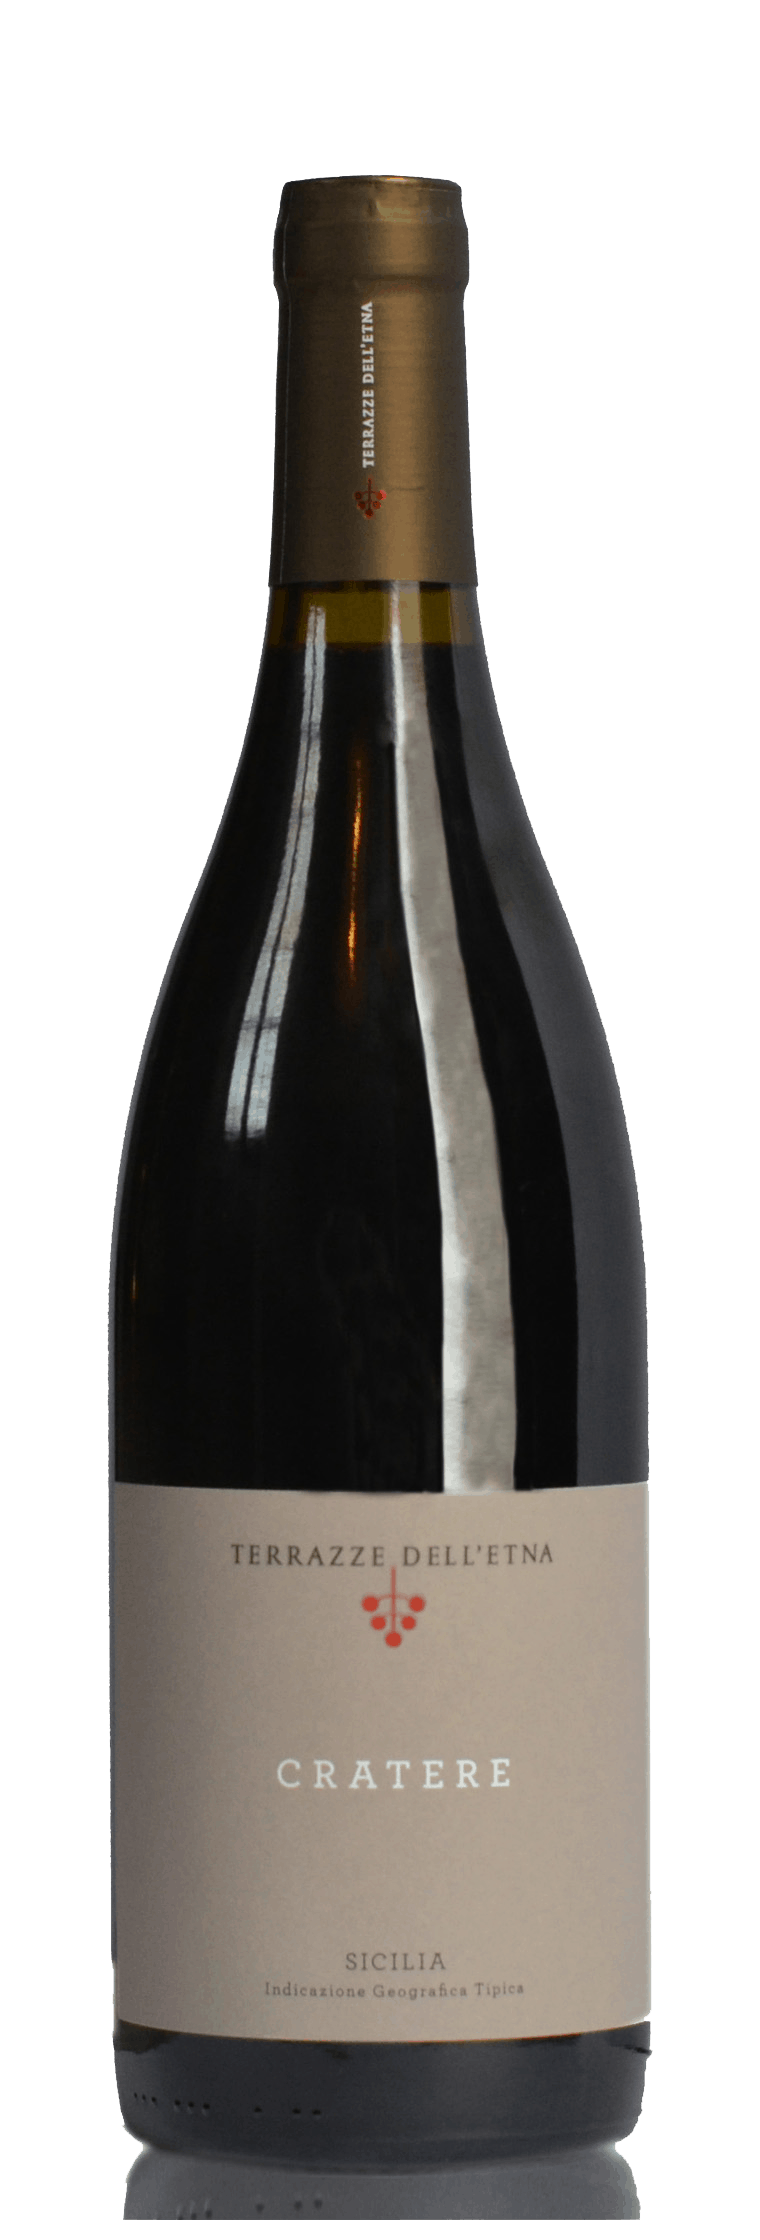 Cratere bottle